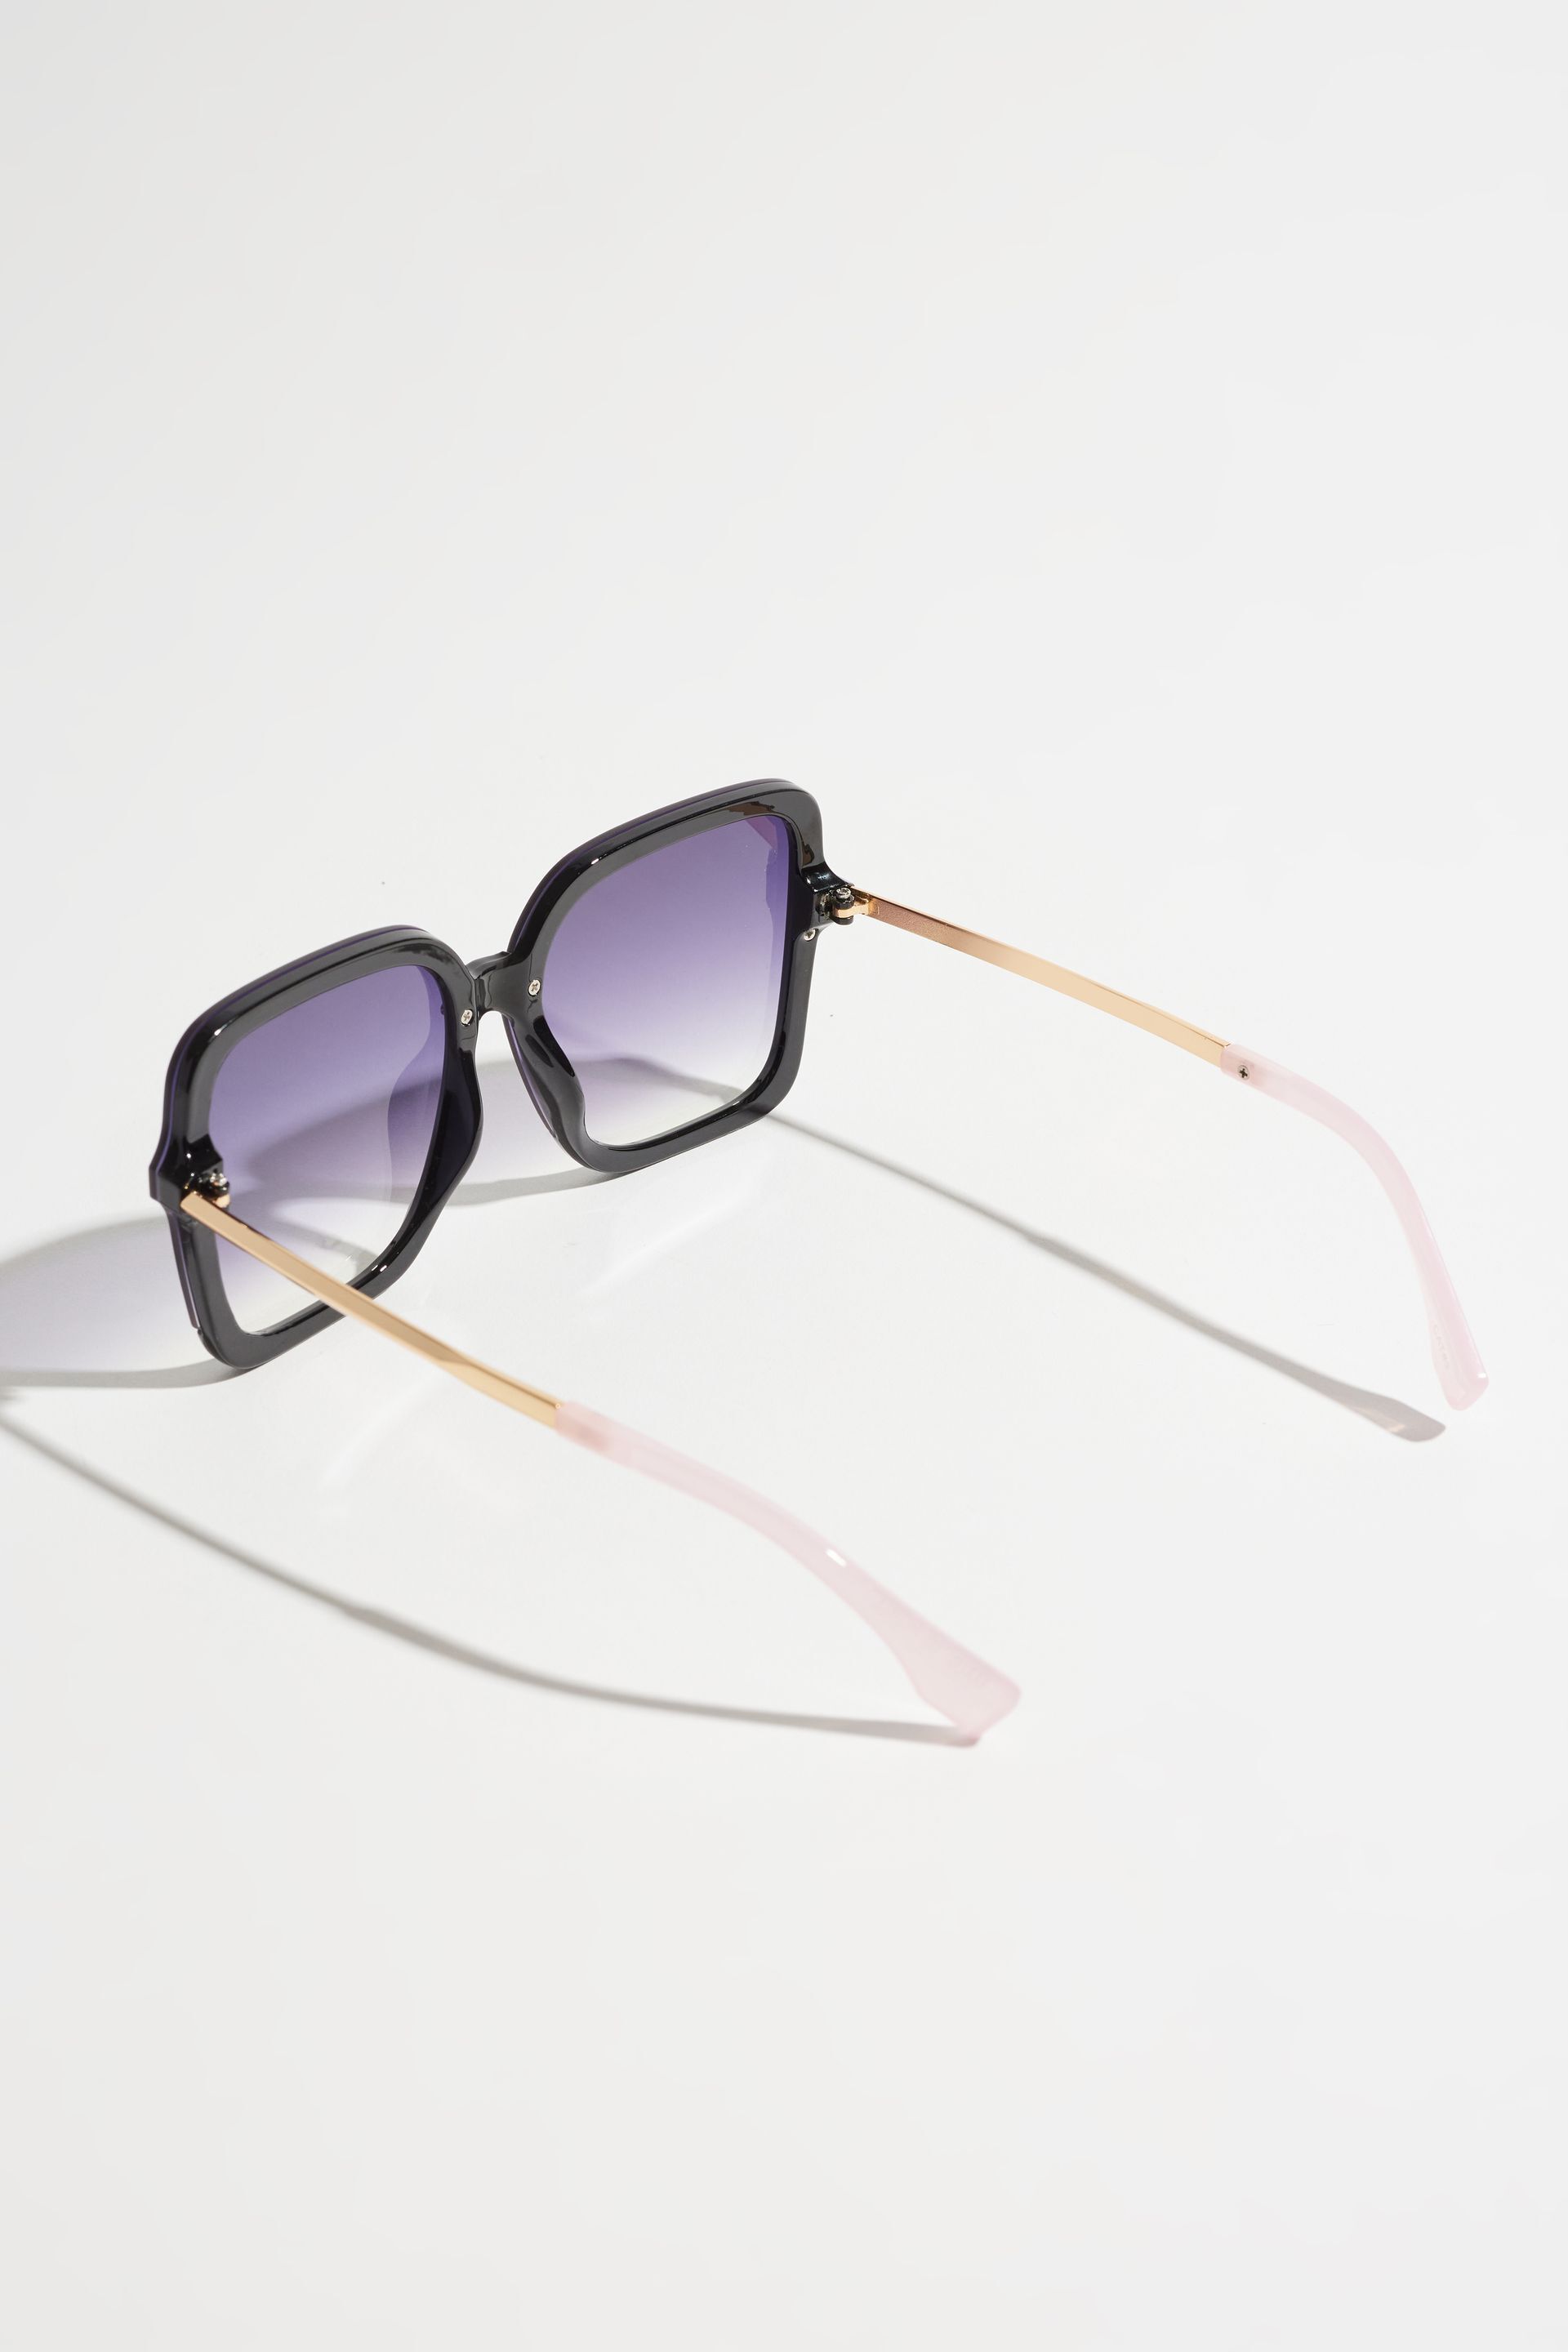 70s Square Sunglasses